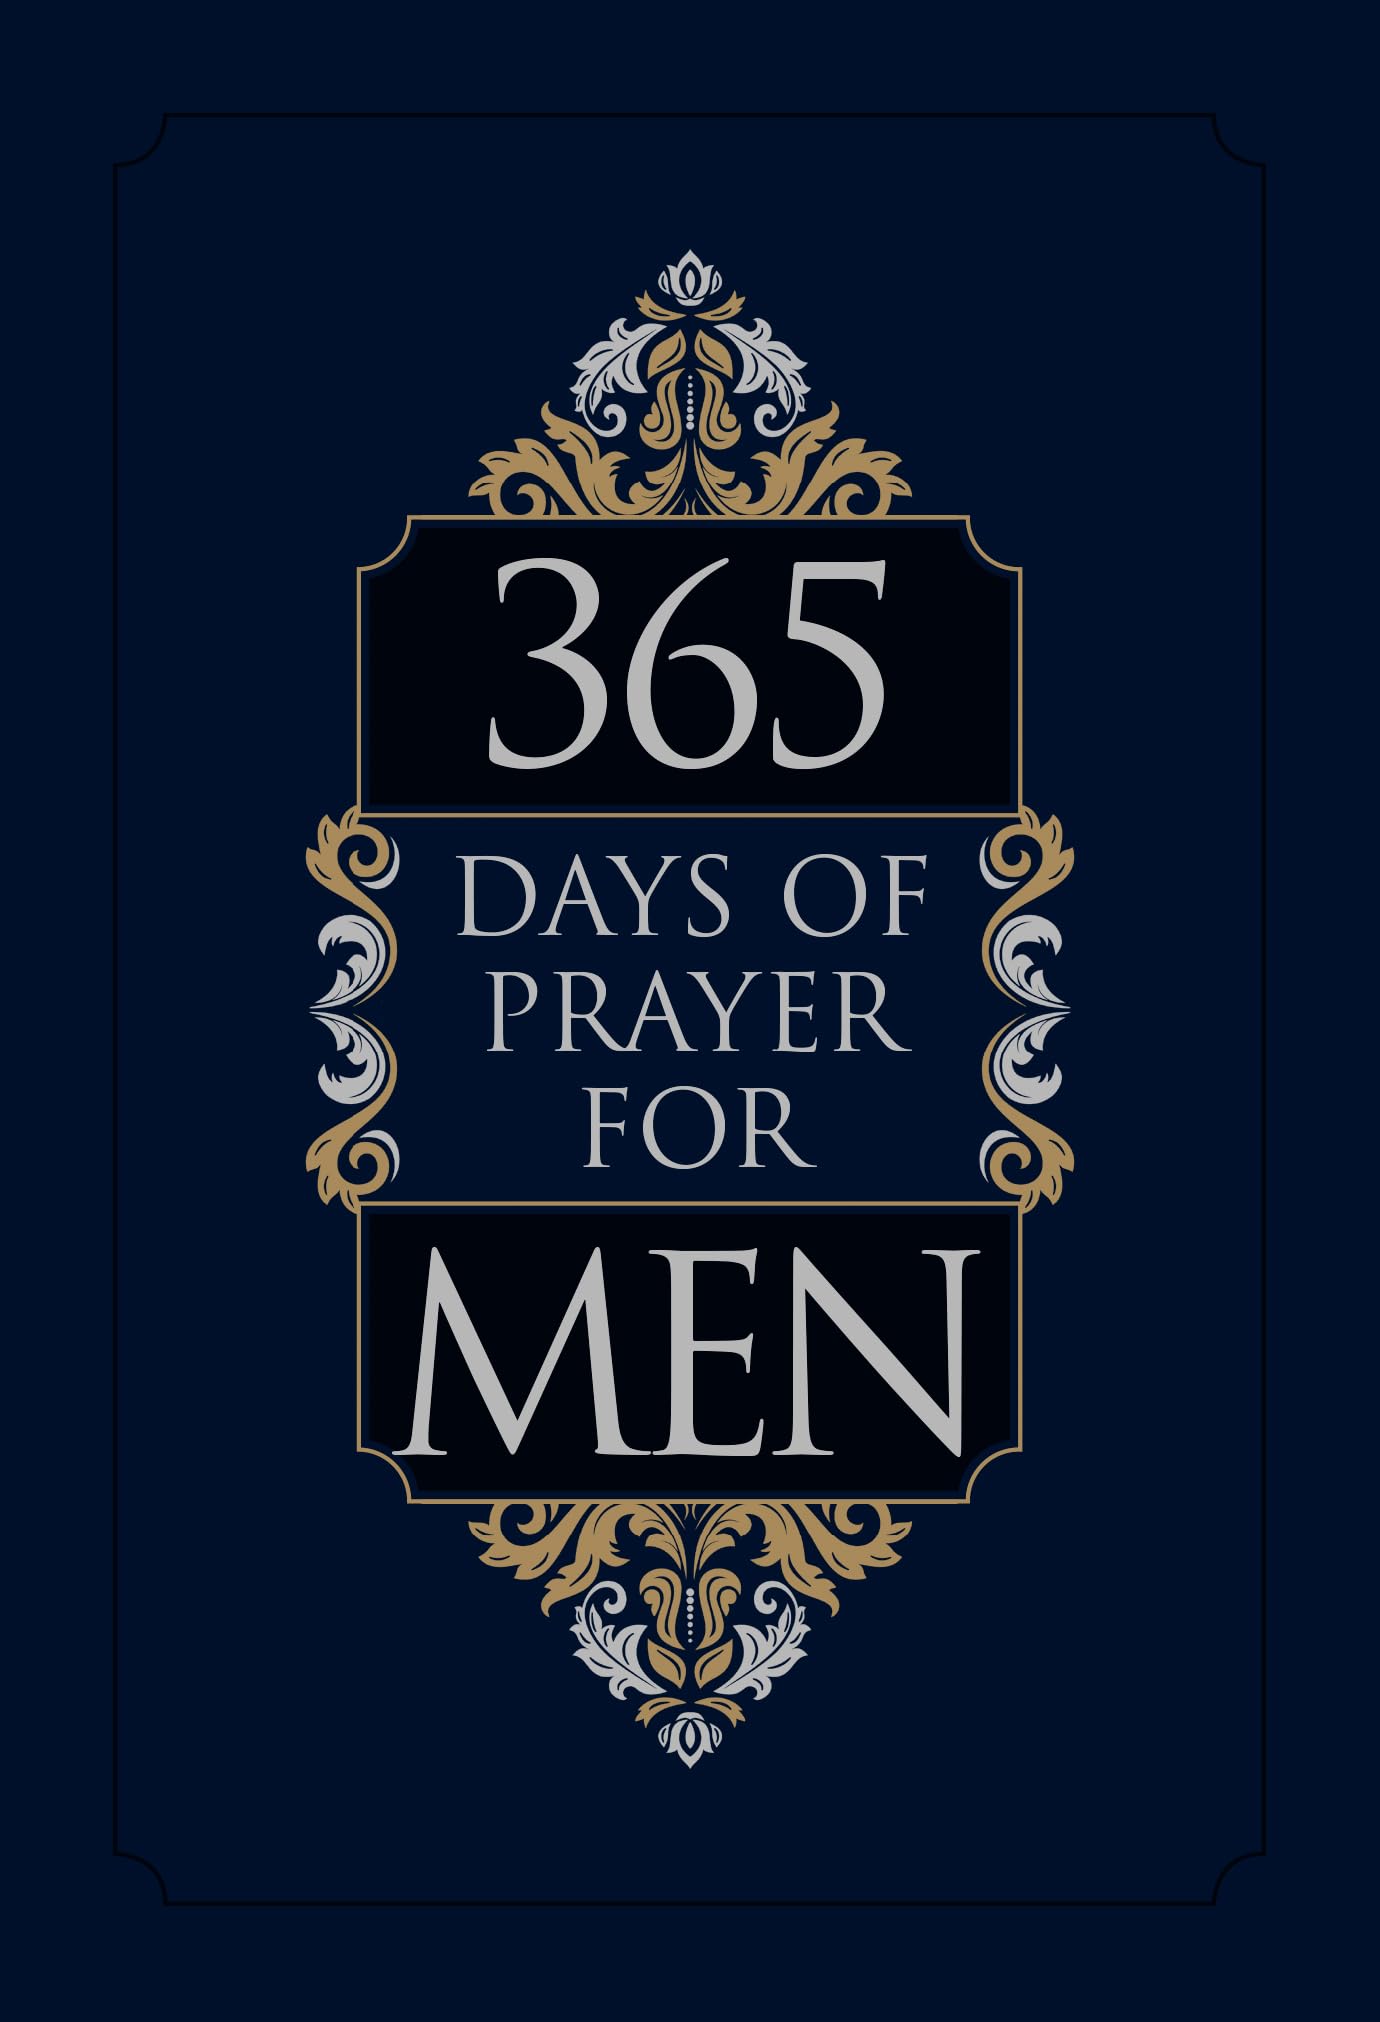 365 Days of Prayer for Men by Broadstreet Publishing Group LLC